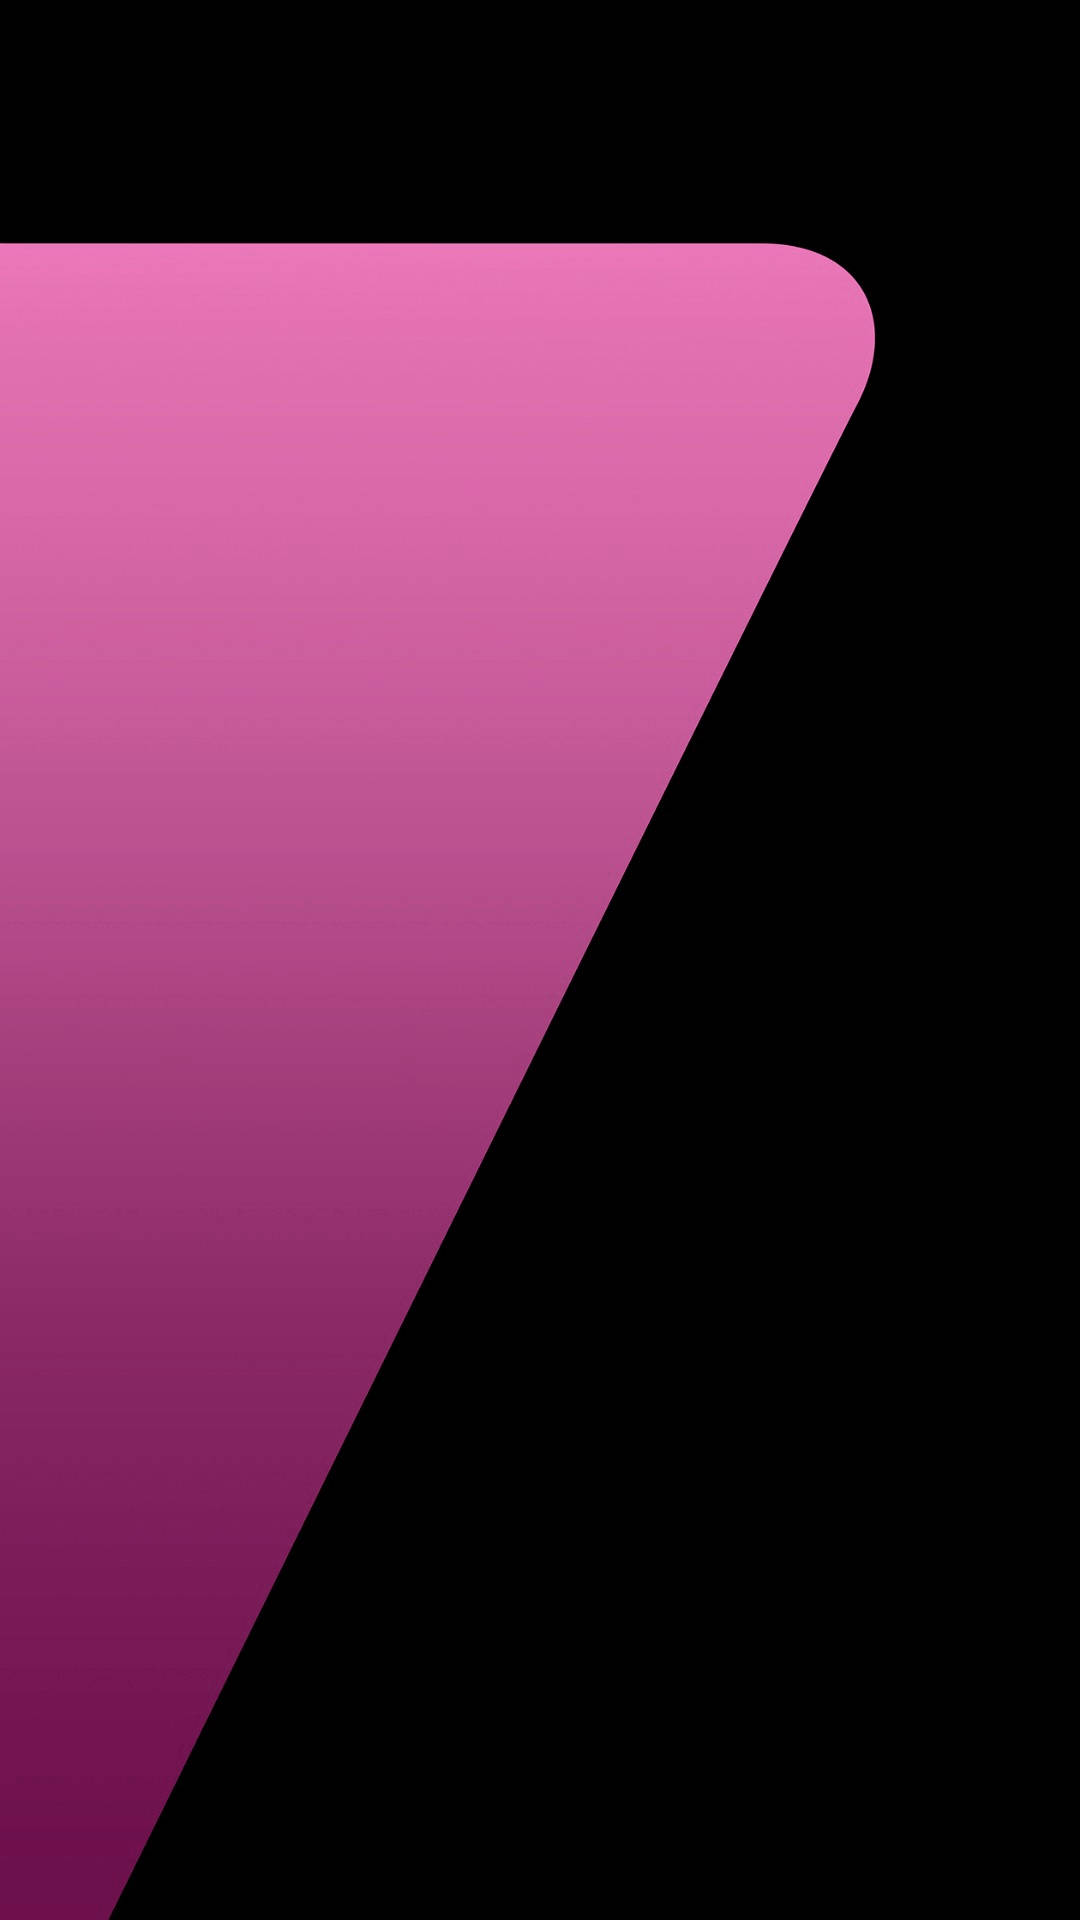 Samsung Galaxy S7 Edge Pink And Black